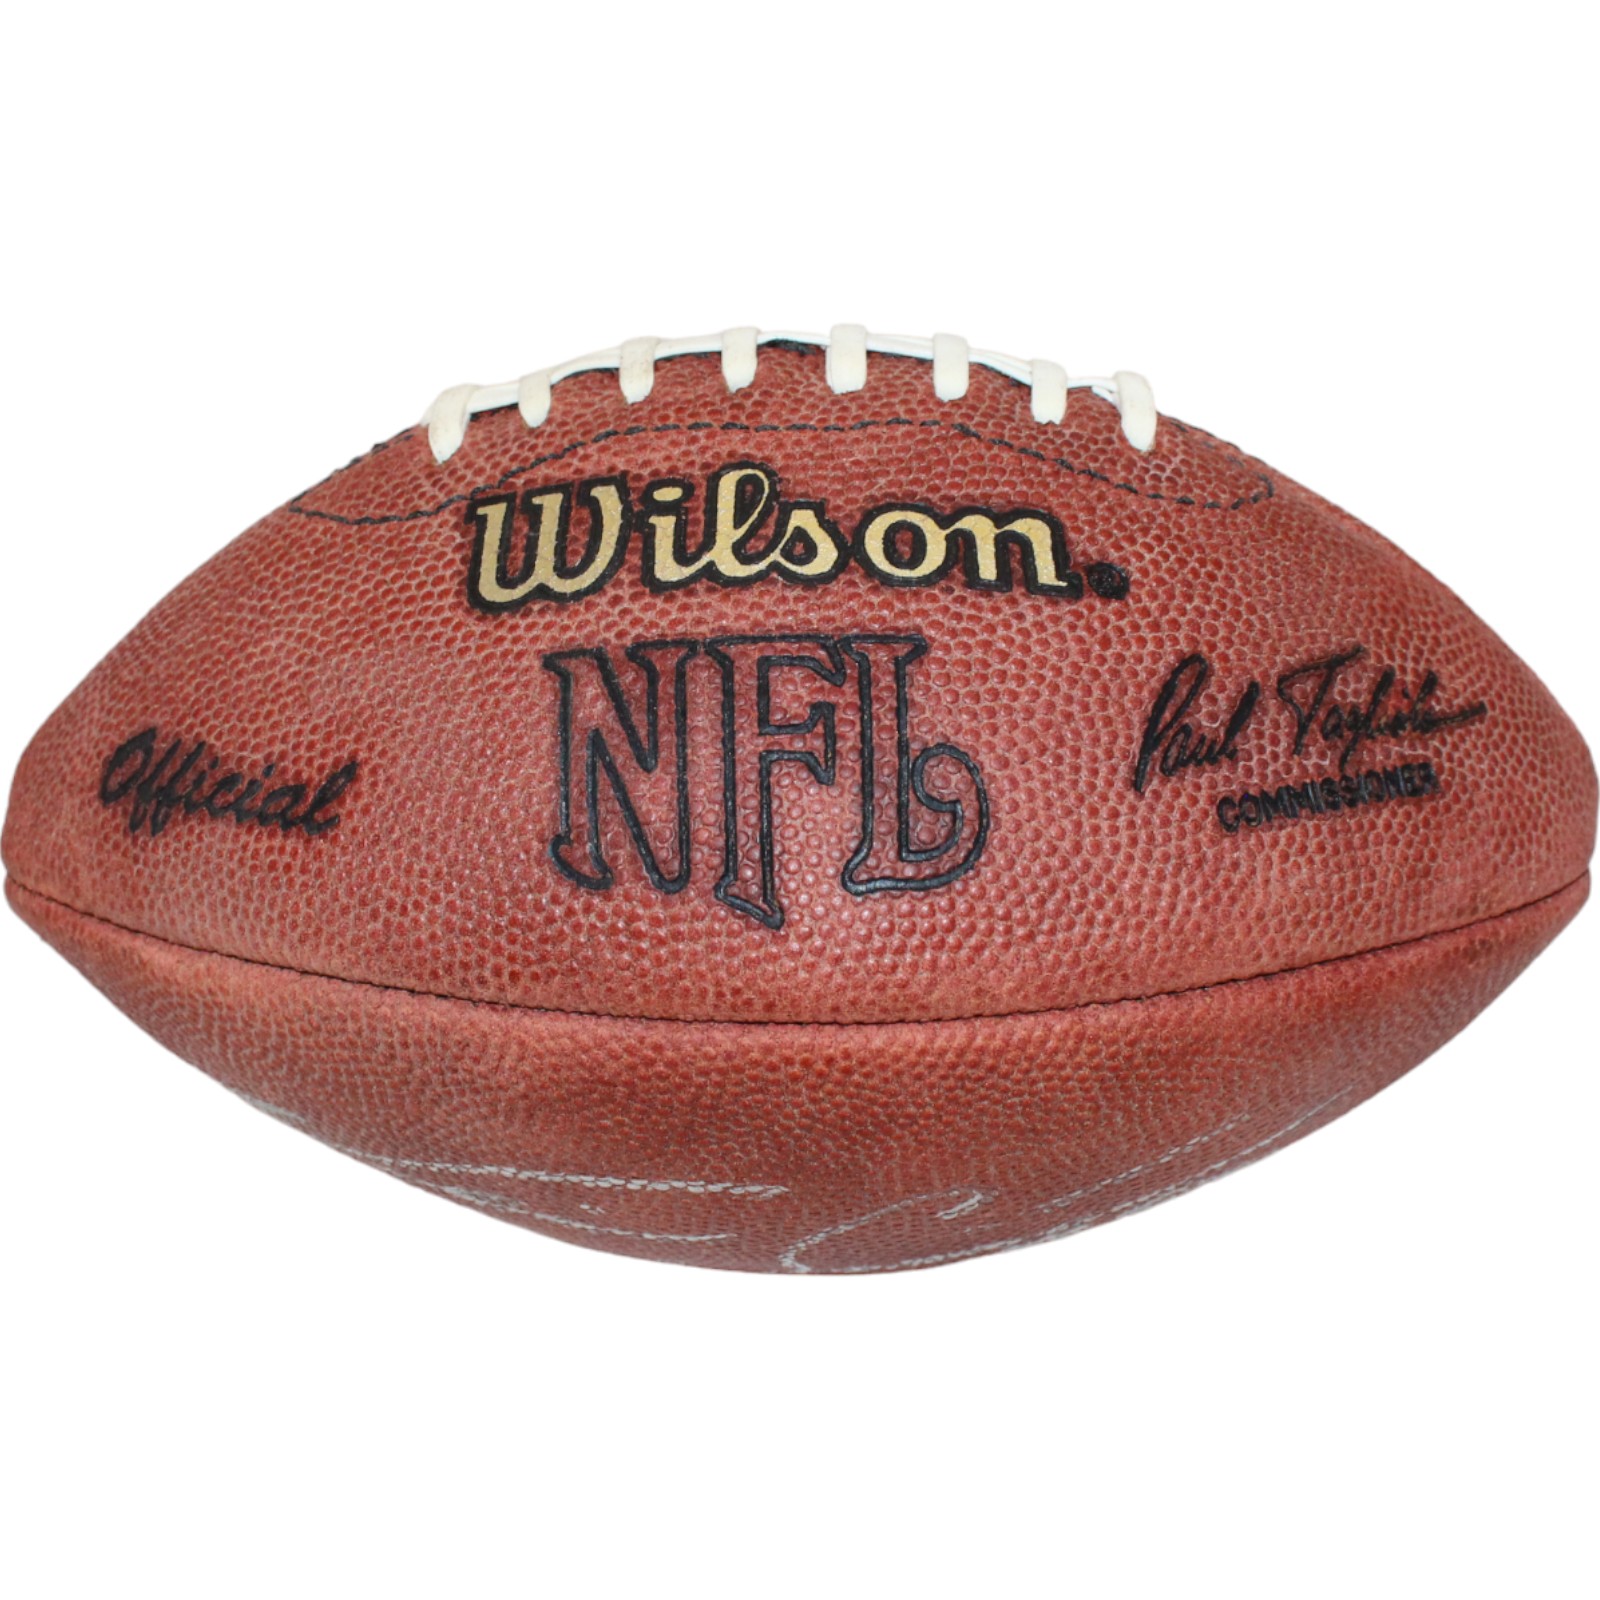 Neil Smith Autographed Wilson Leather Mini Football Beckett 44306